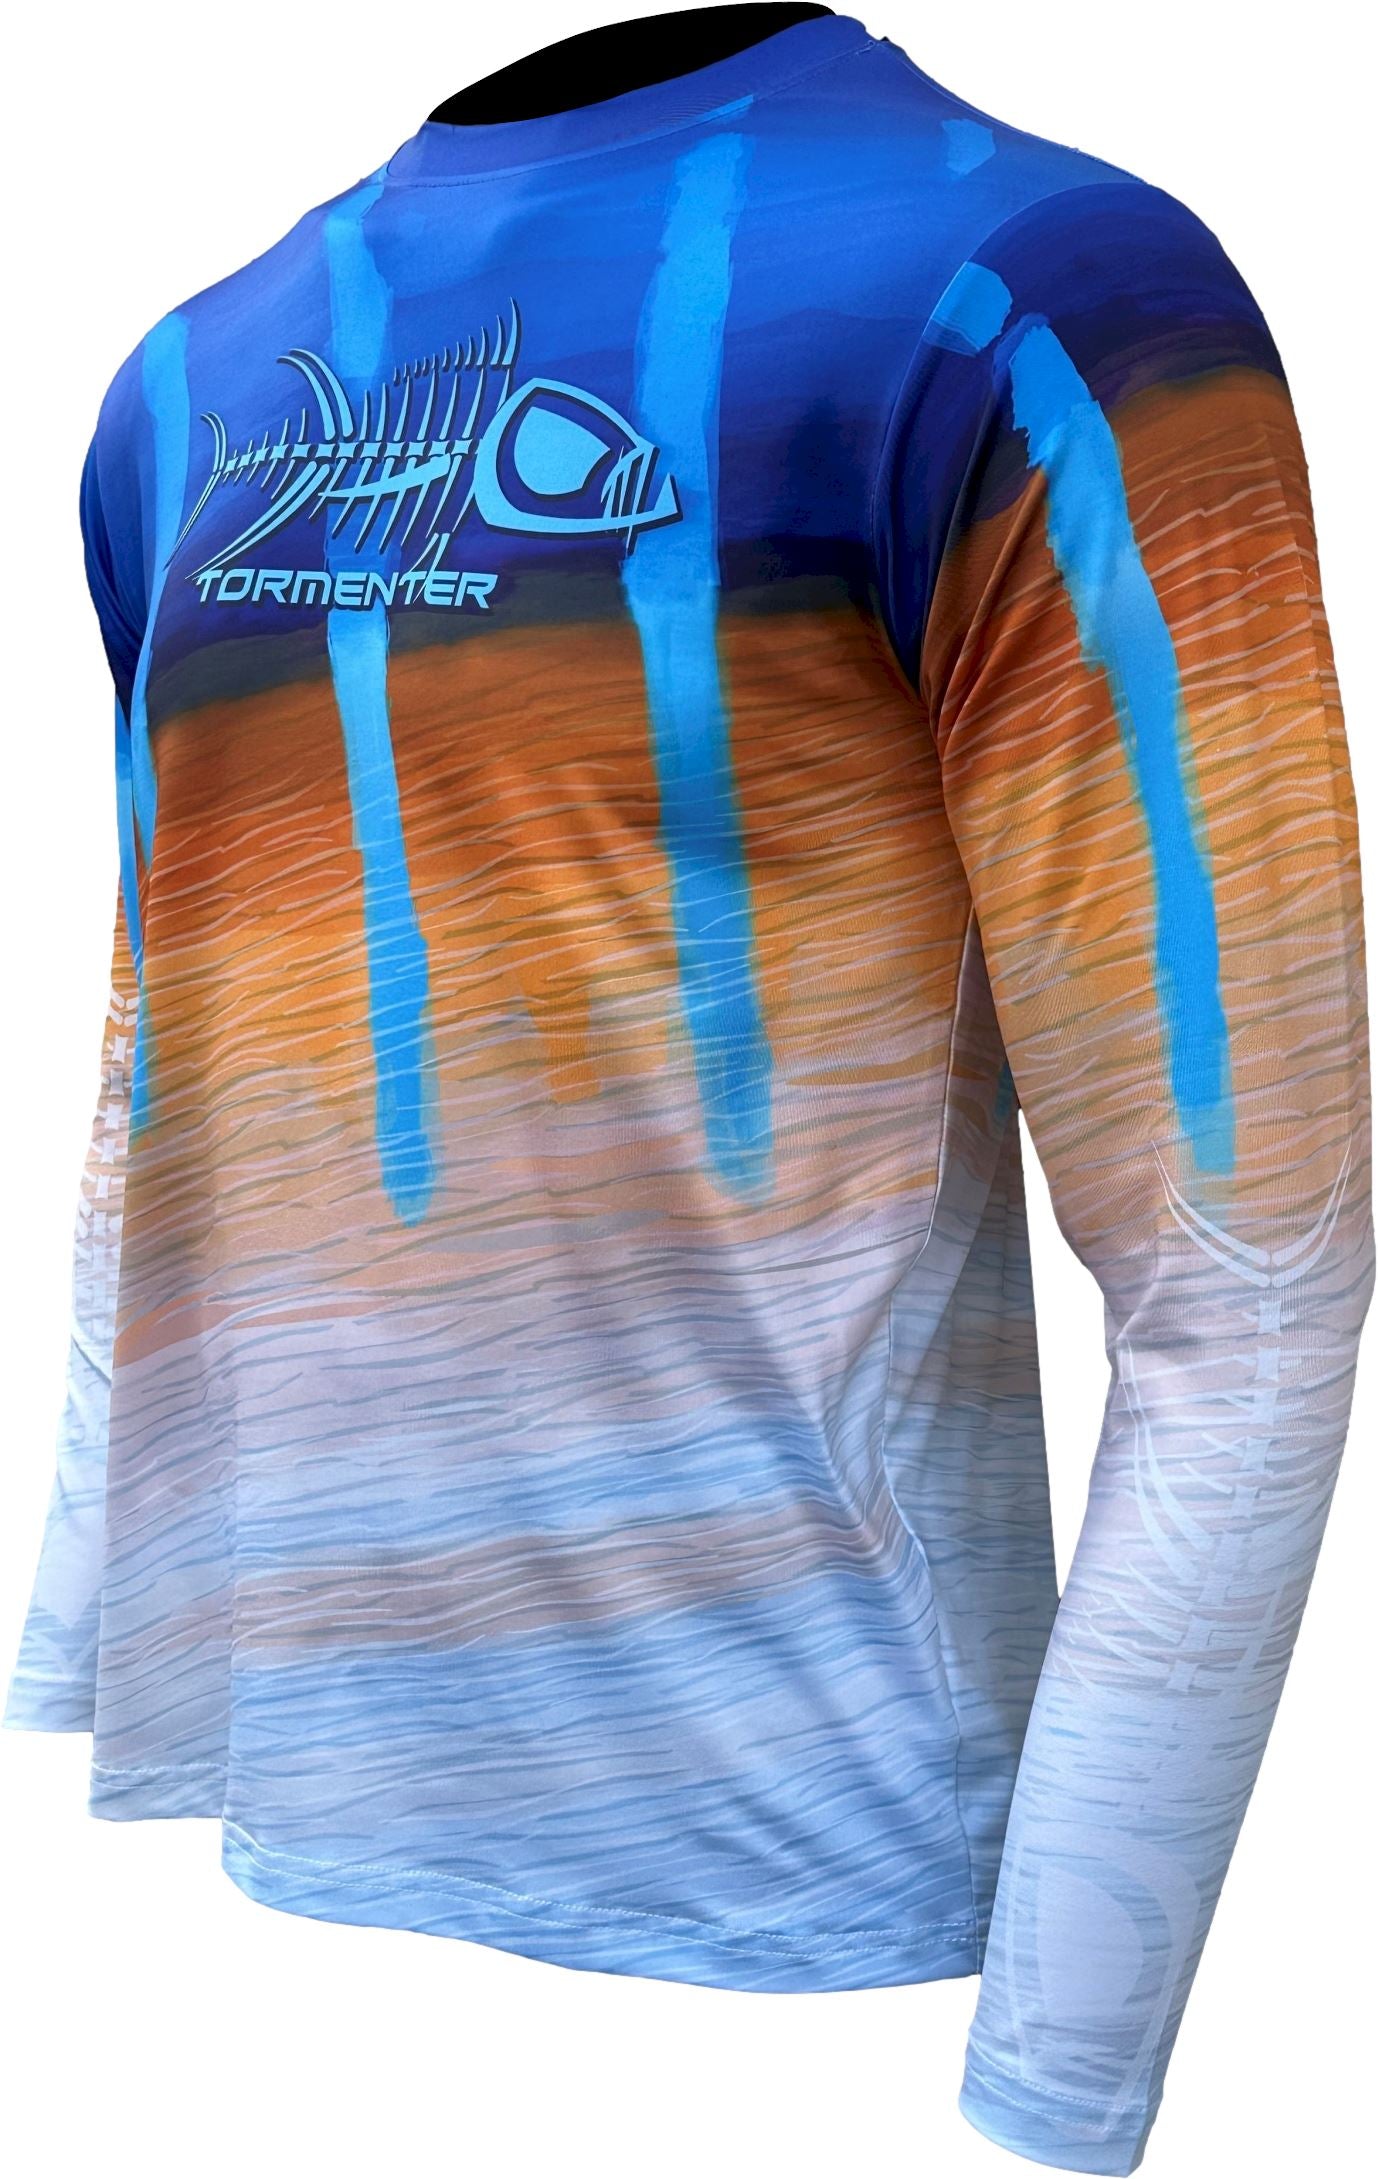 Men's Performance Shirt - Live Series Marlin Men's SPF Ocean Fishing Tops Tormenter Ocean 